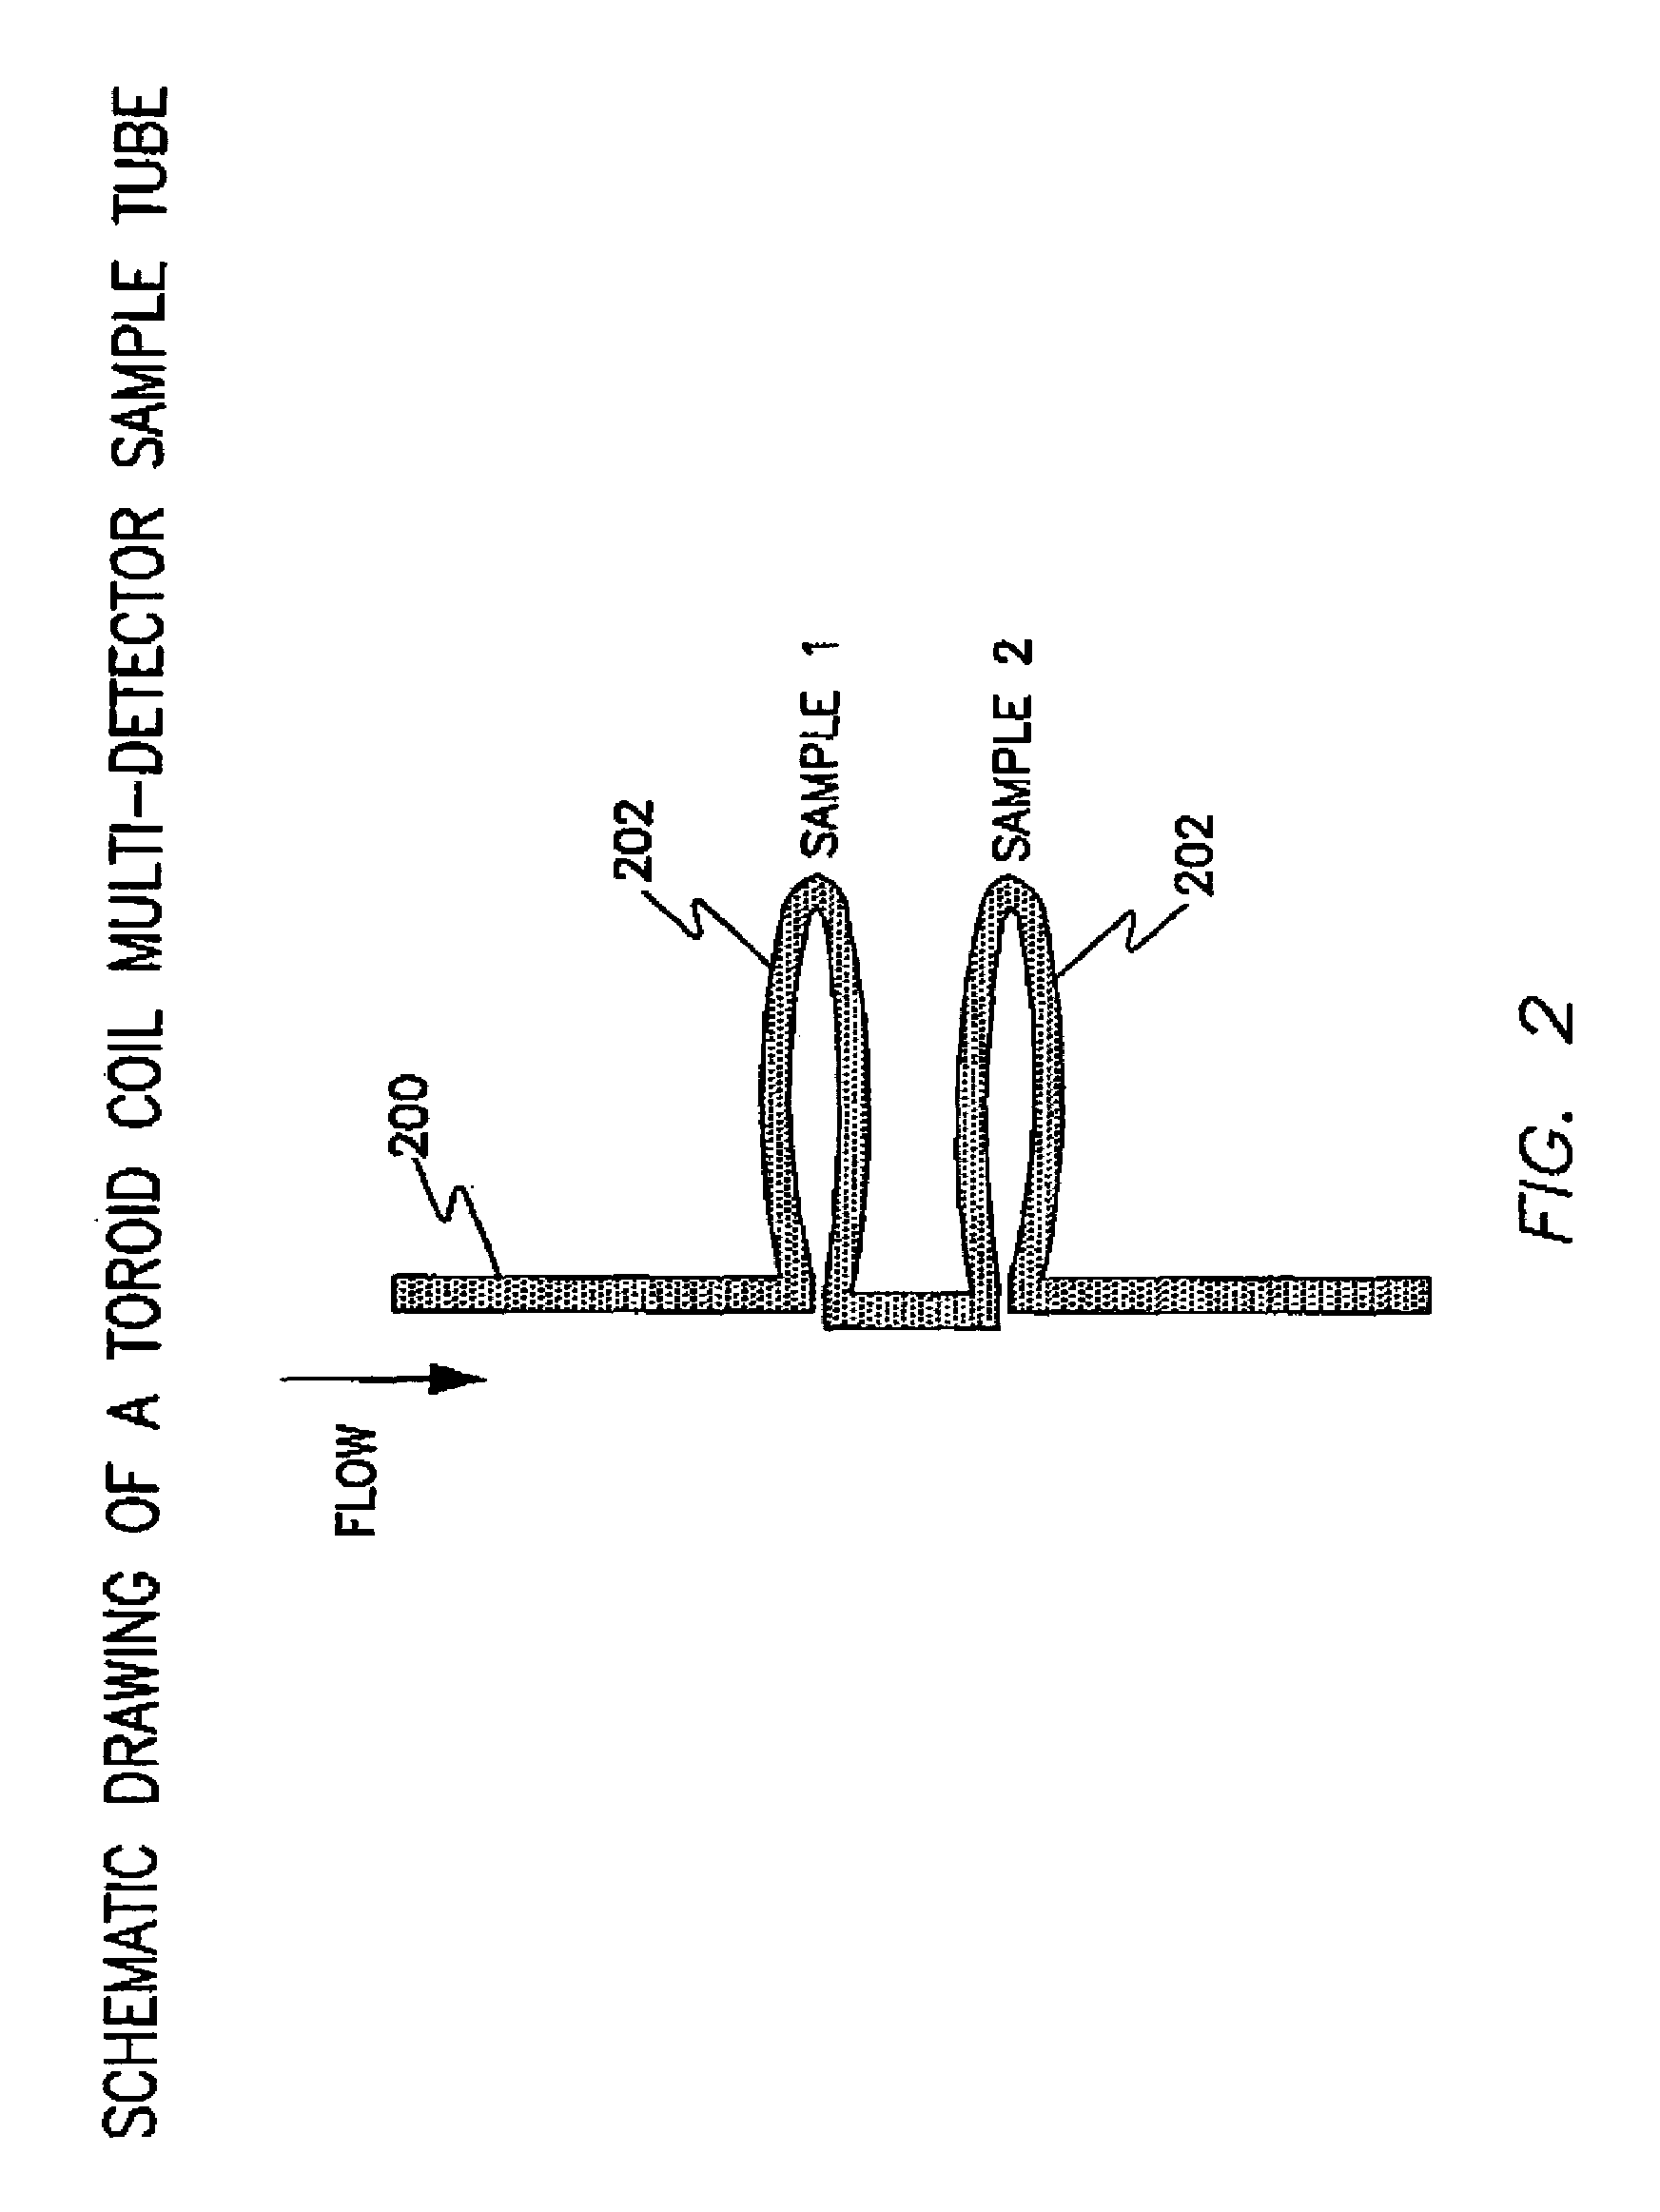 Toroid cavity/coil NMR multi-detector